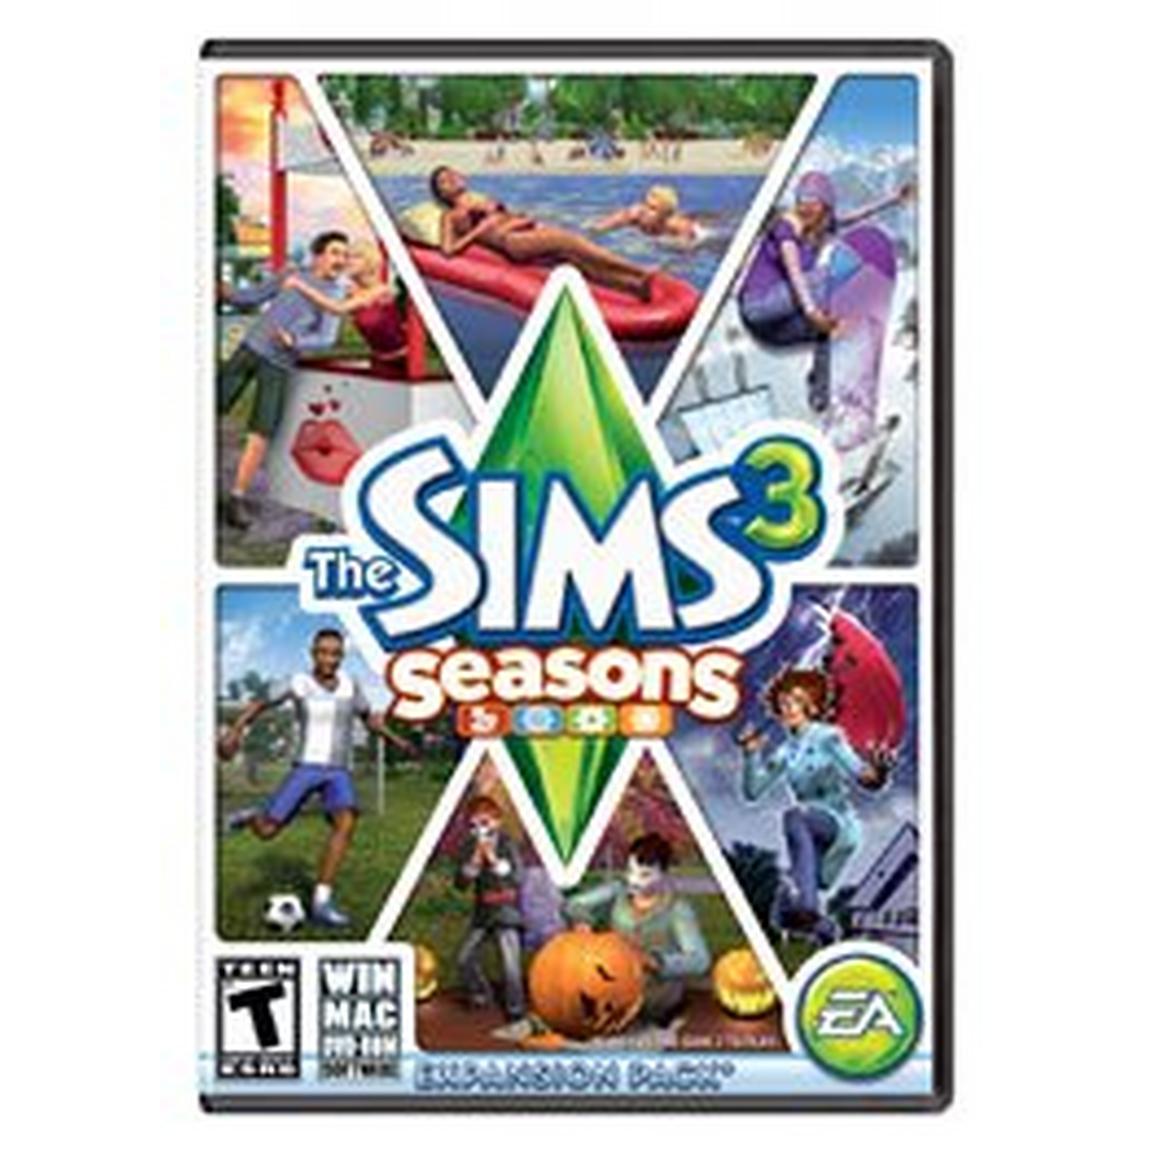 Electronic Arts The Sims 3 Seasons DLC - PC EA app